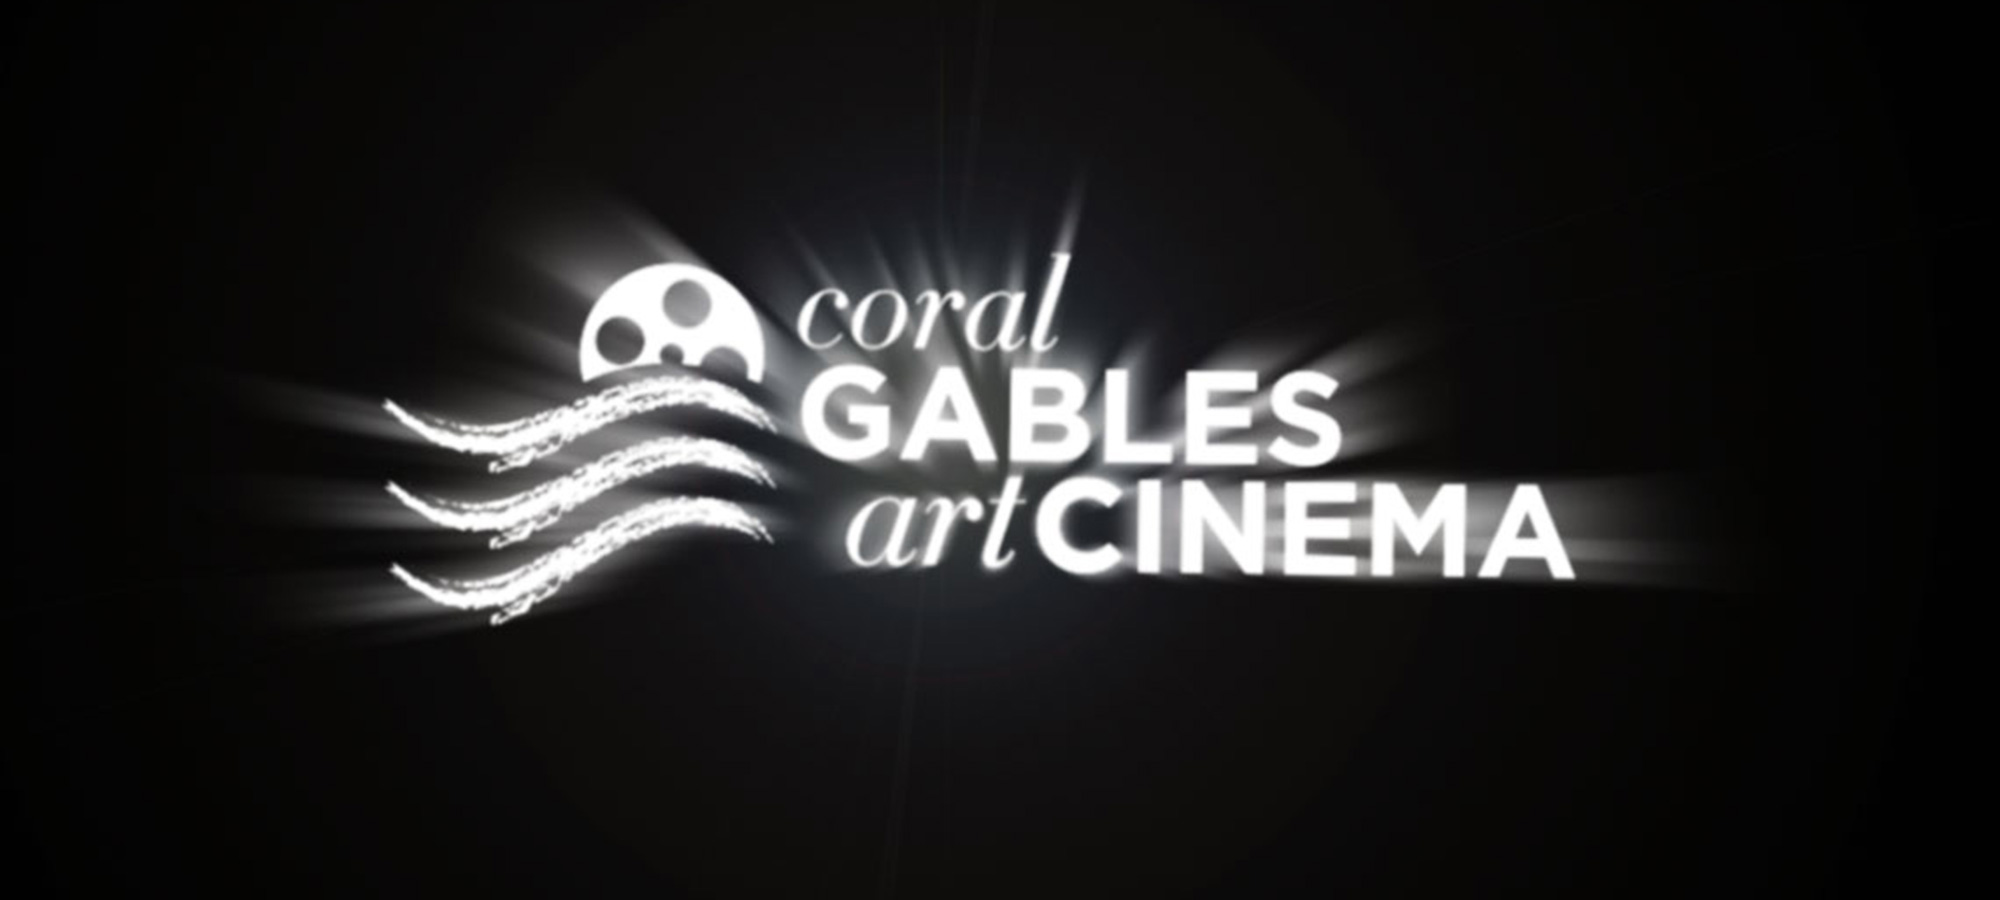 Coral Gables Art Cinema Jacober Creative